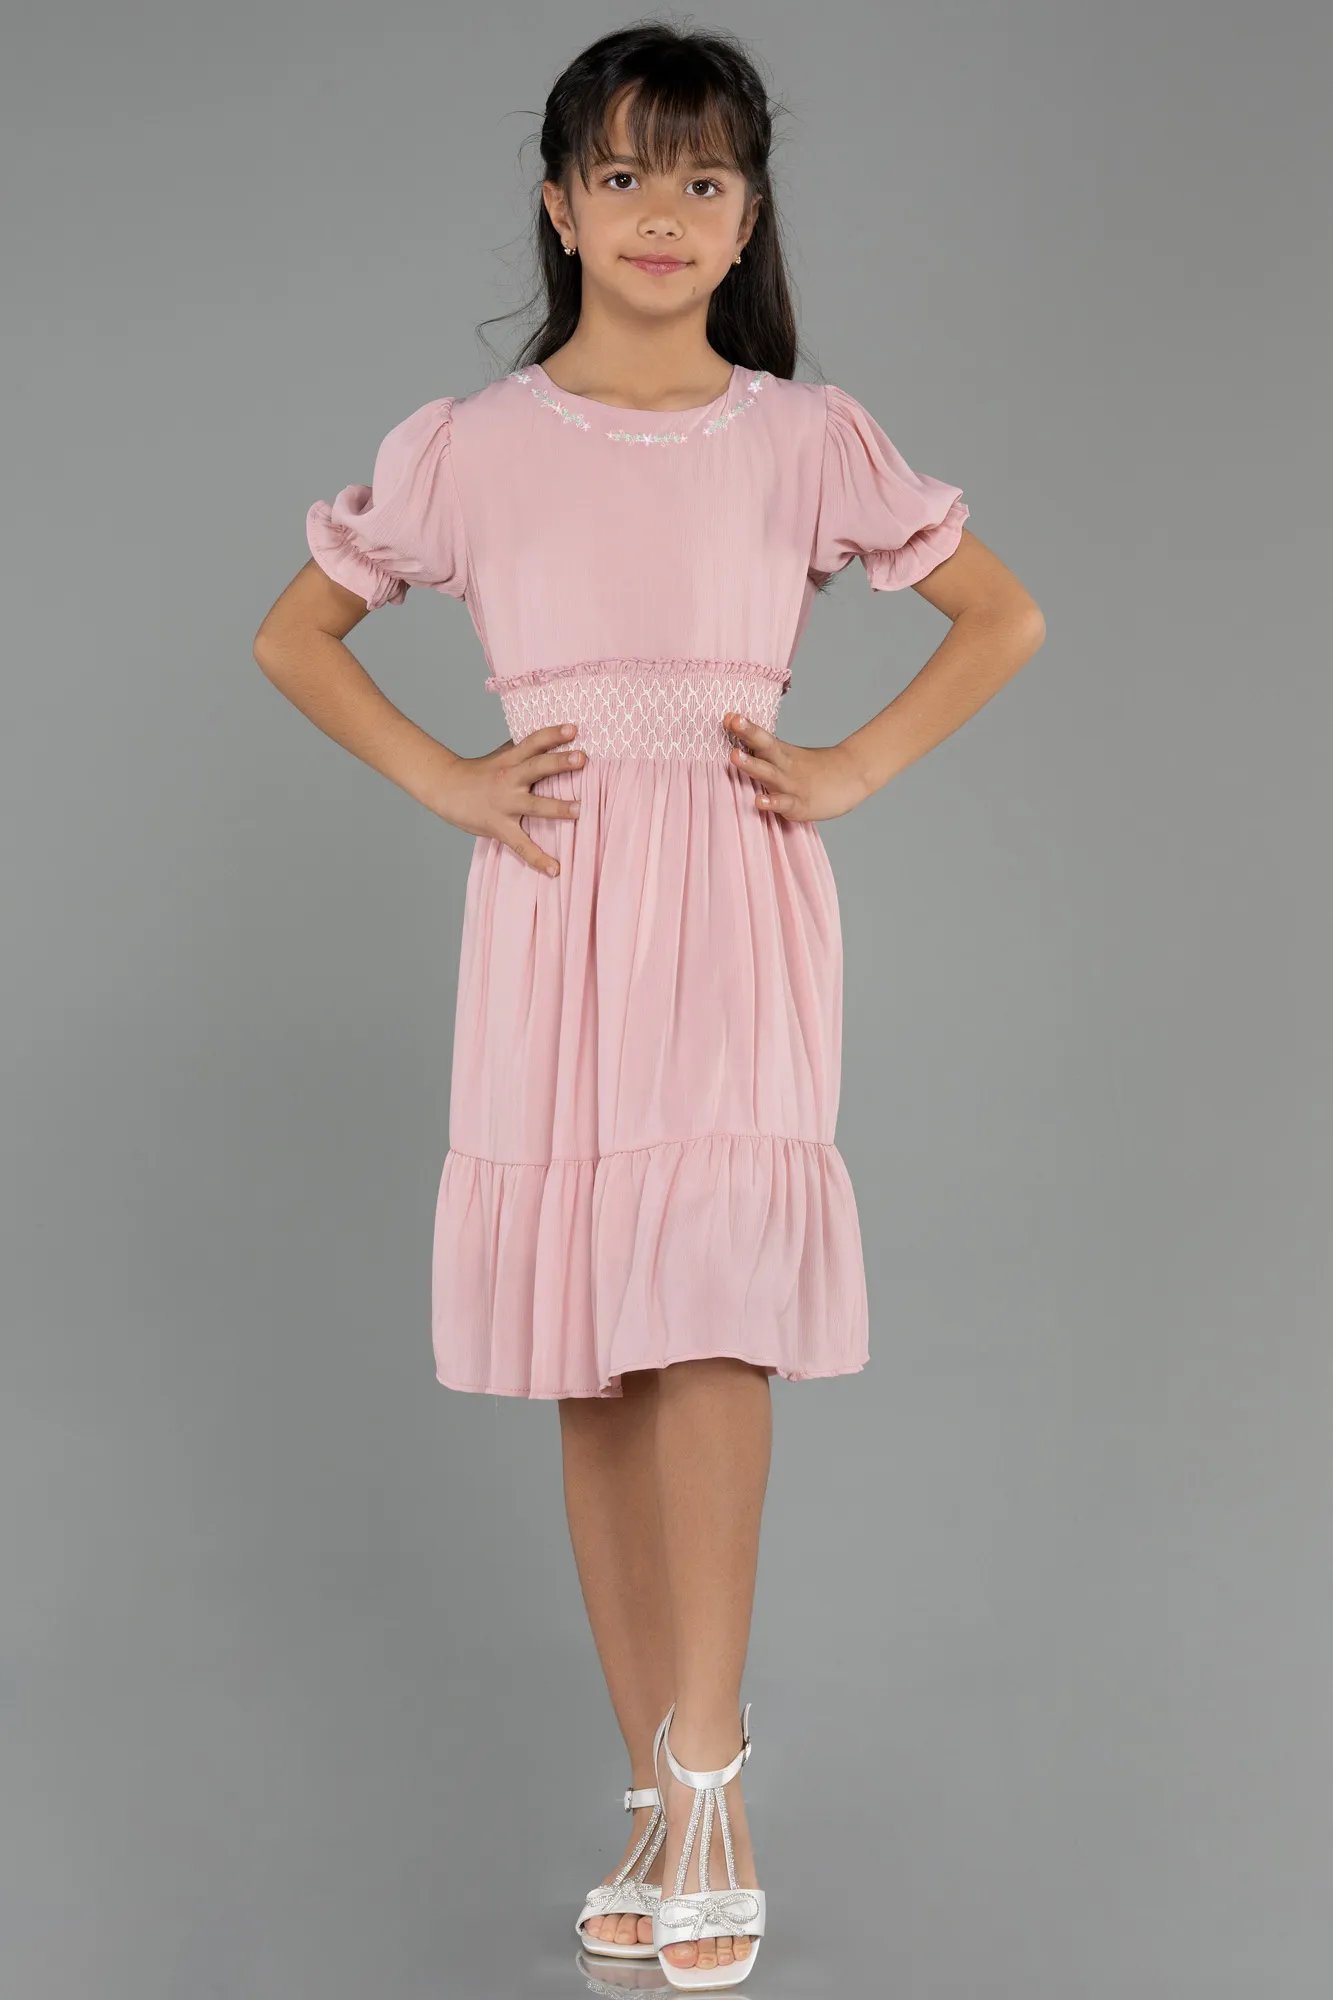 Powder Color-Midi Girl Dress ABK1948